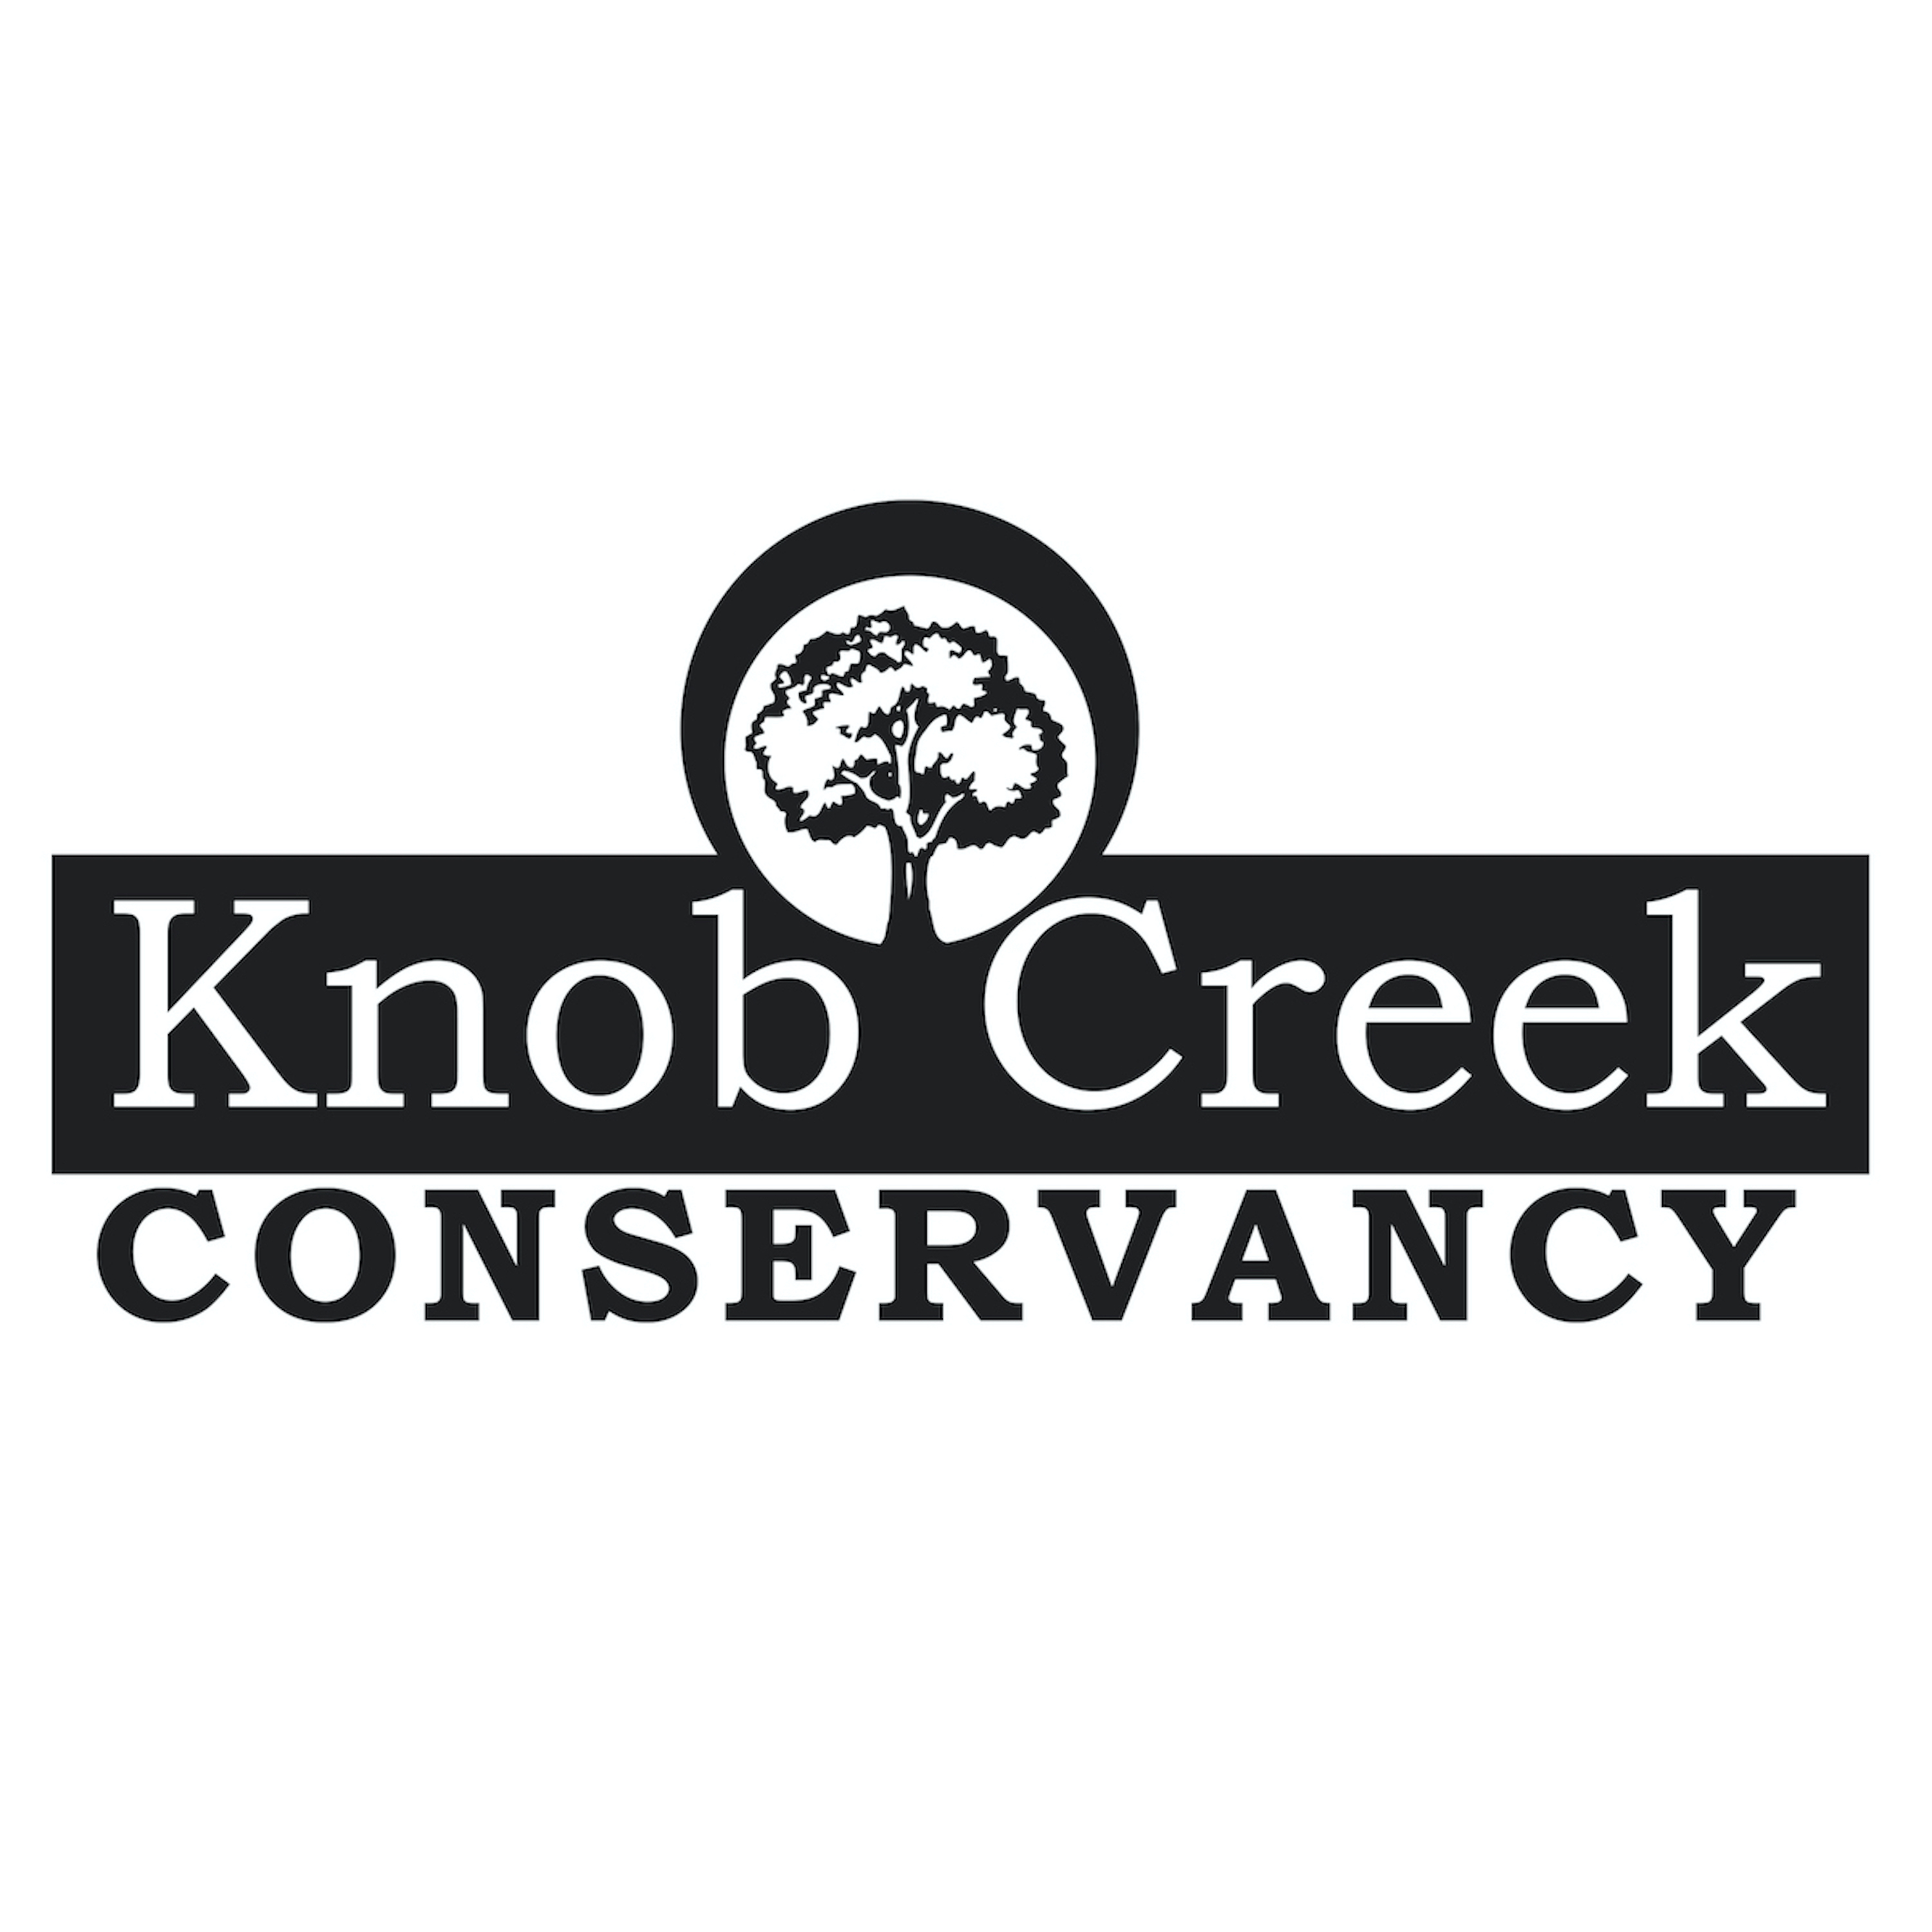 Knob Creek Conservancy logo